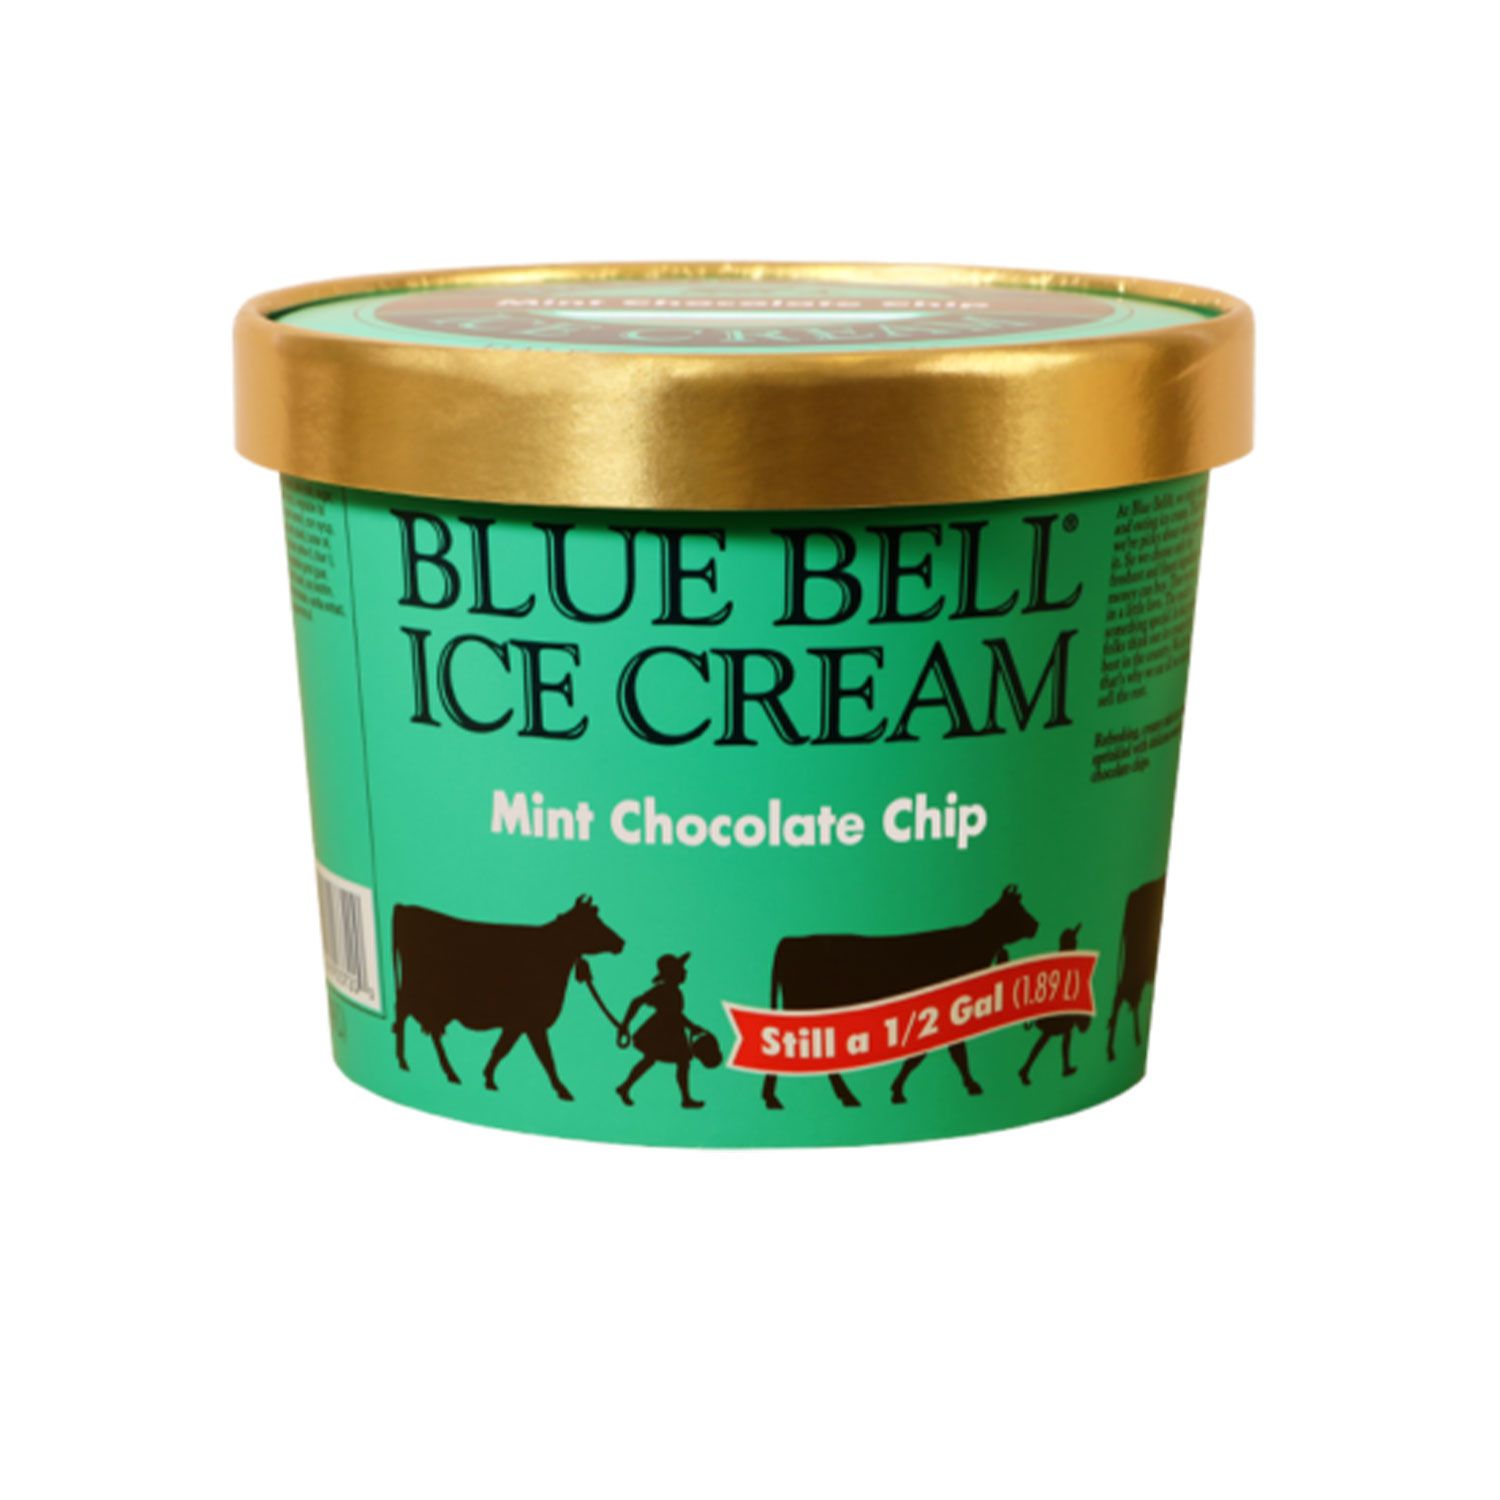 Half gallon tub of blue bell mint chocolate chip ice cream